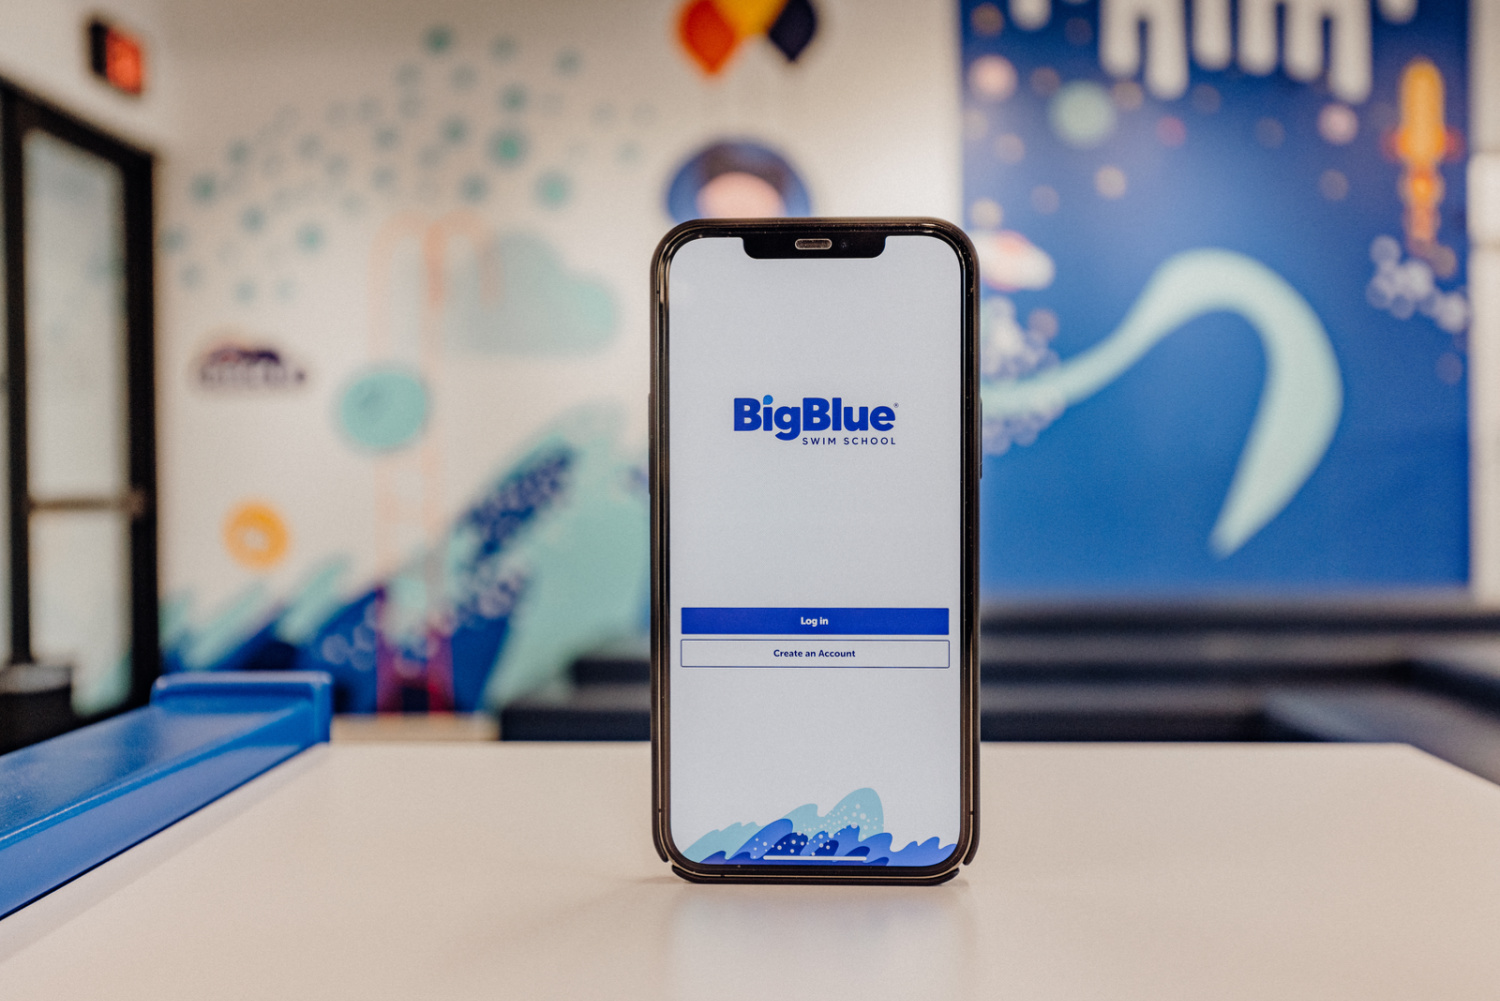 Big Blue Swim School Facility Management Mobile App